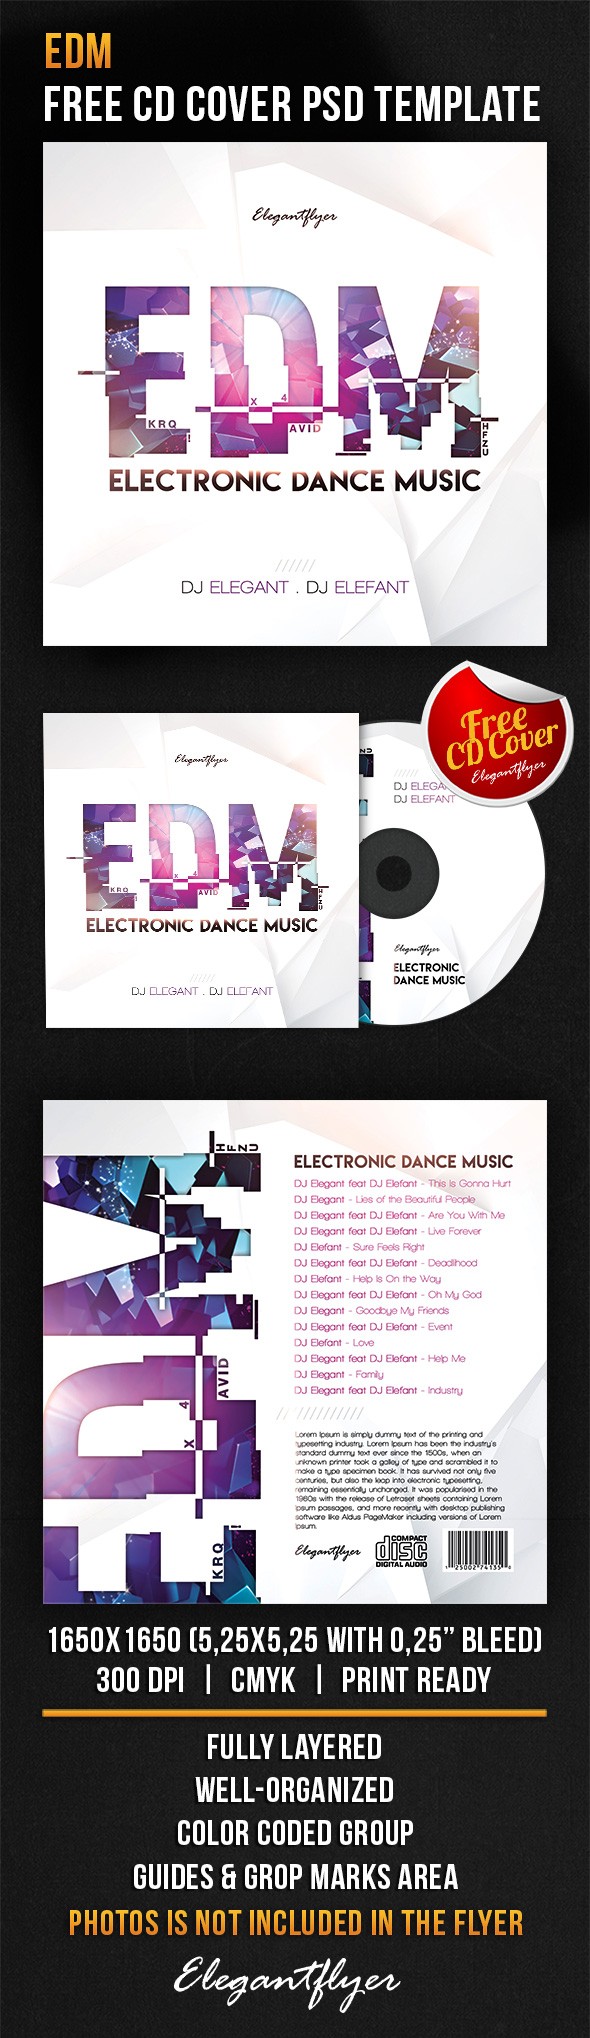 EDM translates to "Musique électronique dance" in French. by ElegantFlyer